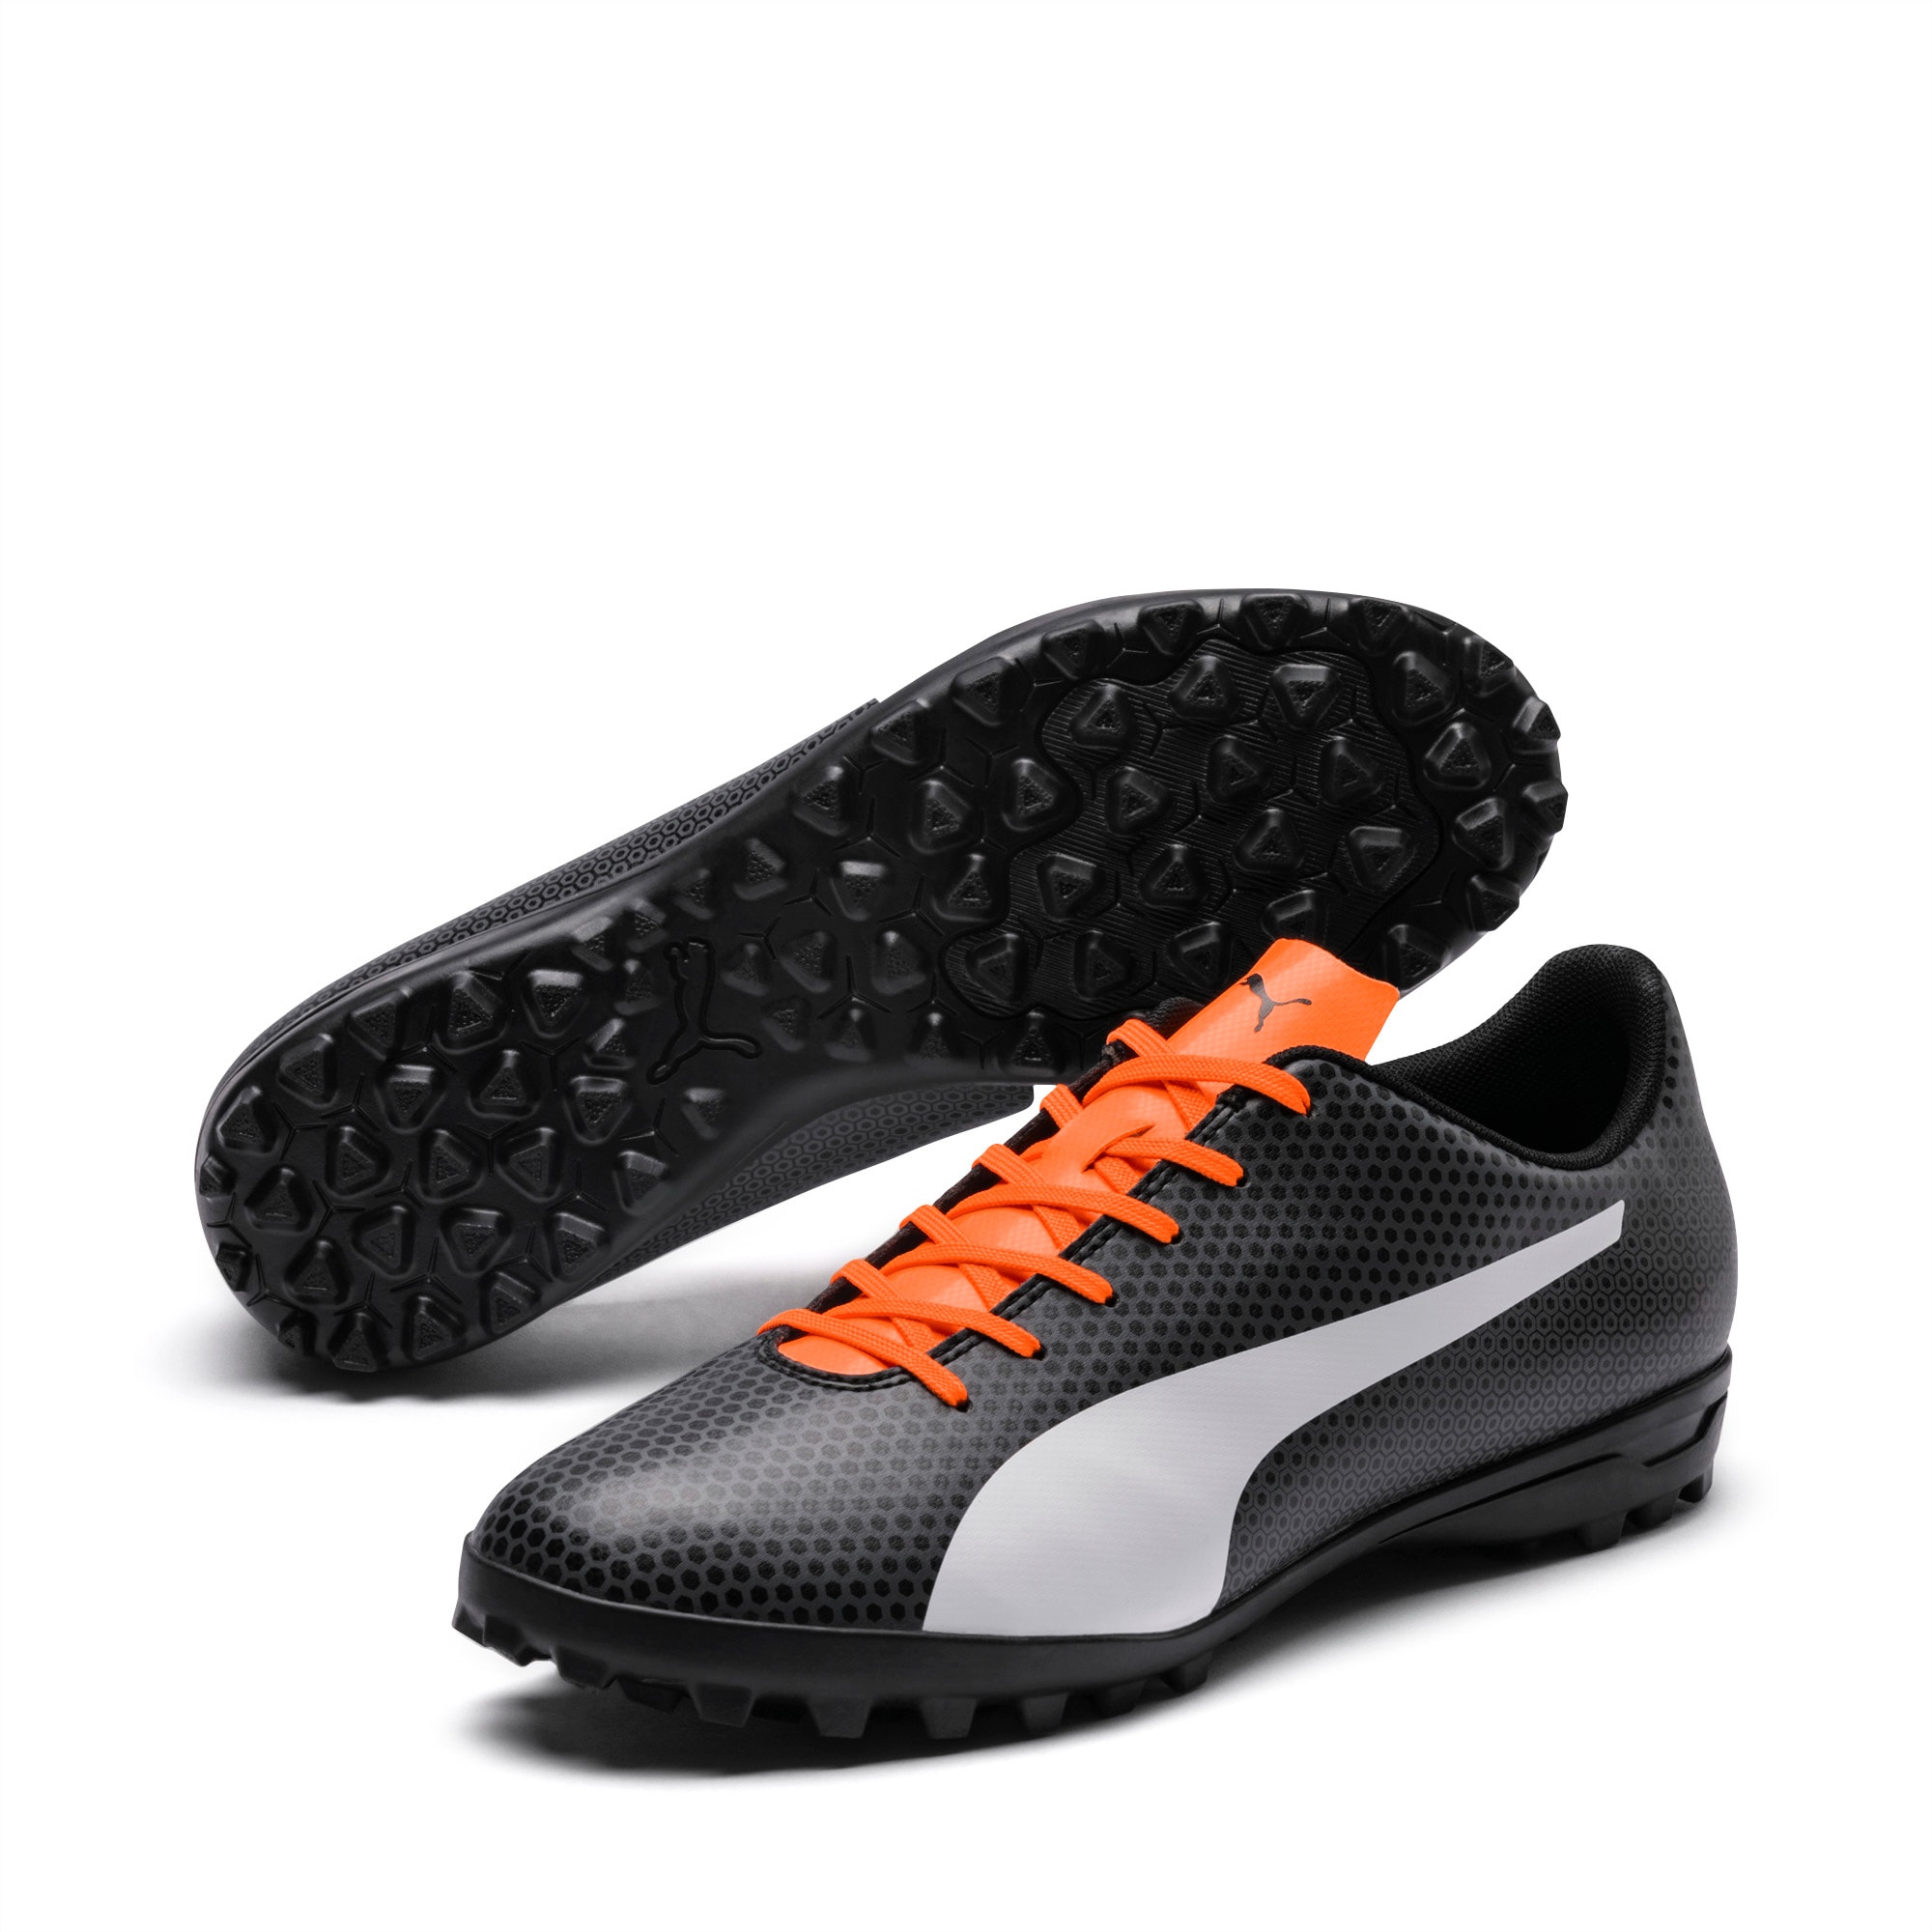 PUMA Spirit TT Turf Soccer Shoes | PUMA US